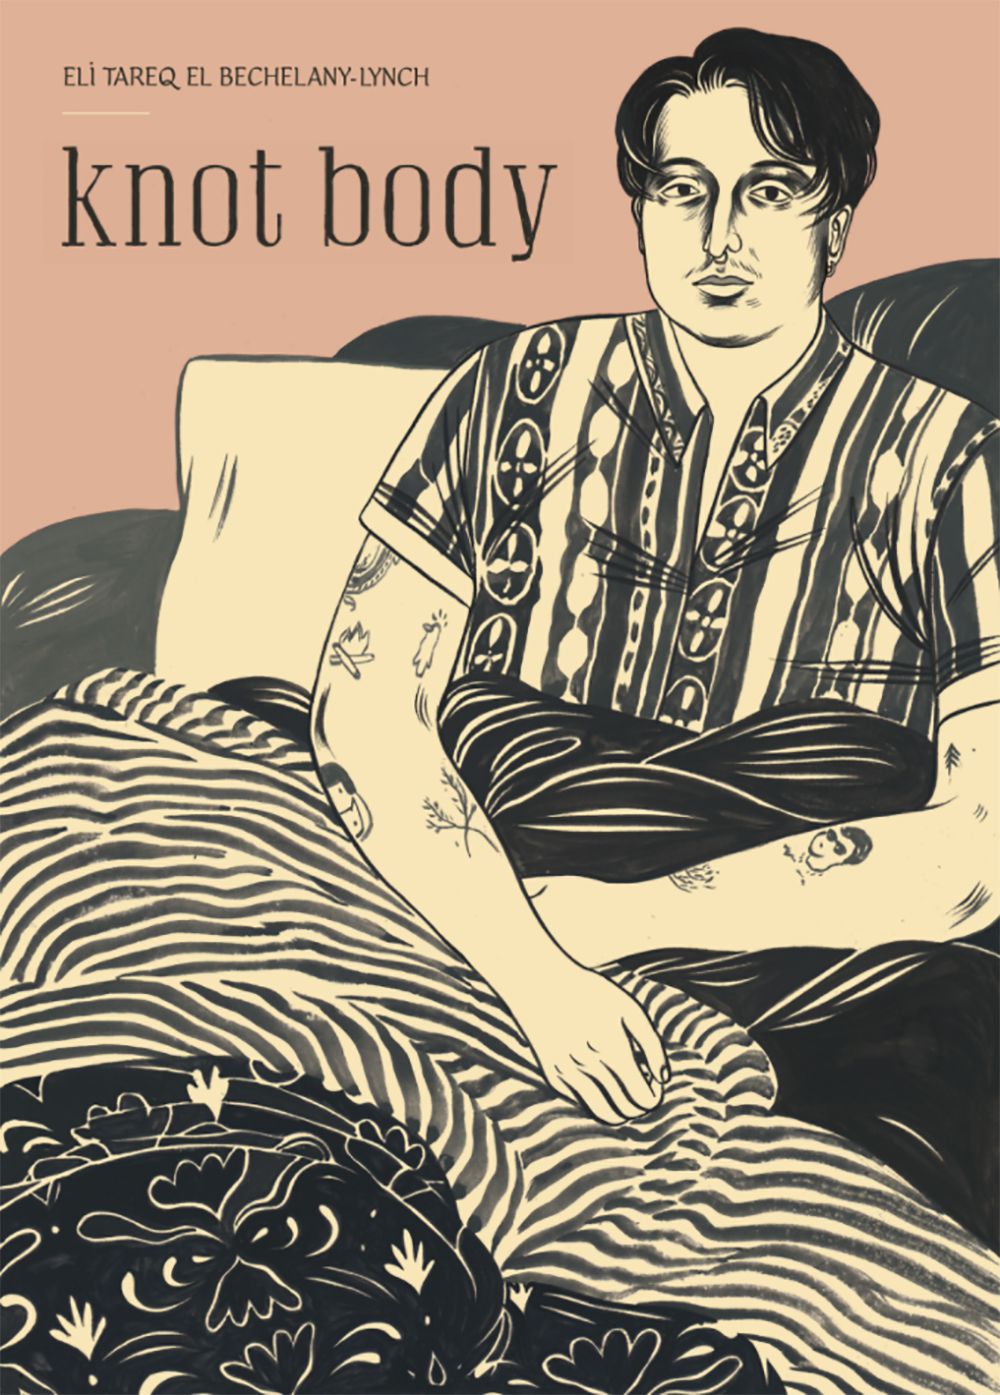 Couverture de Knot Body par Eli Tareq El Bechelany-Lynch